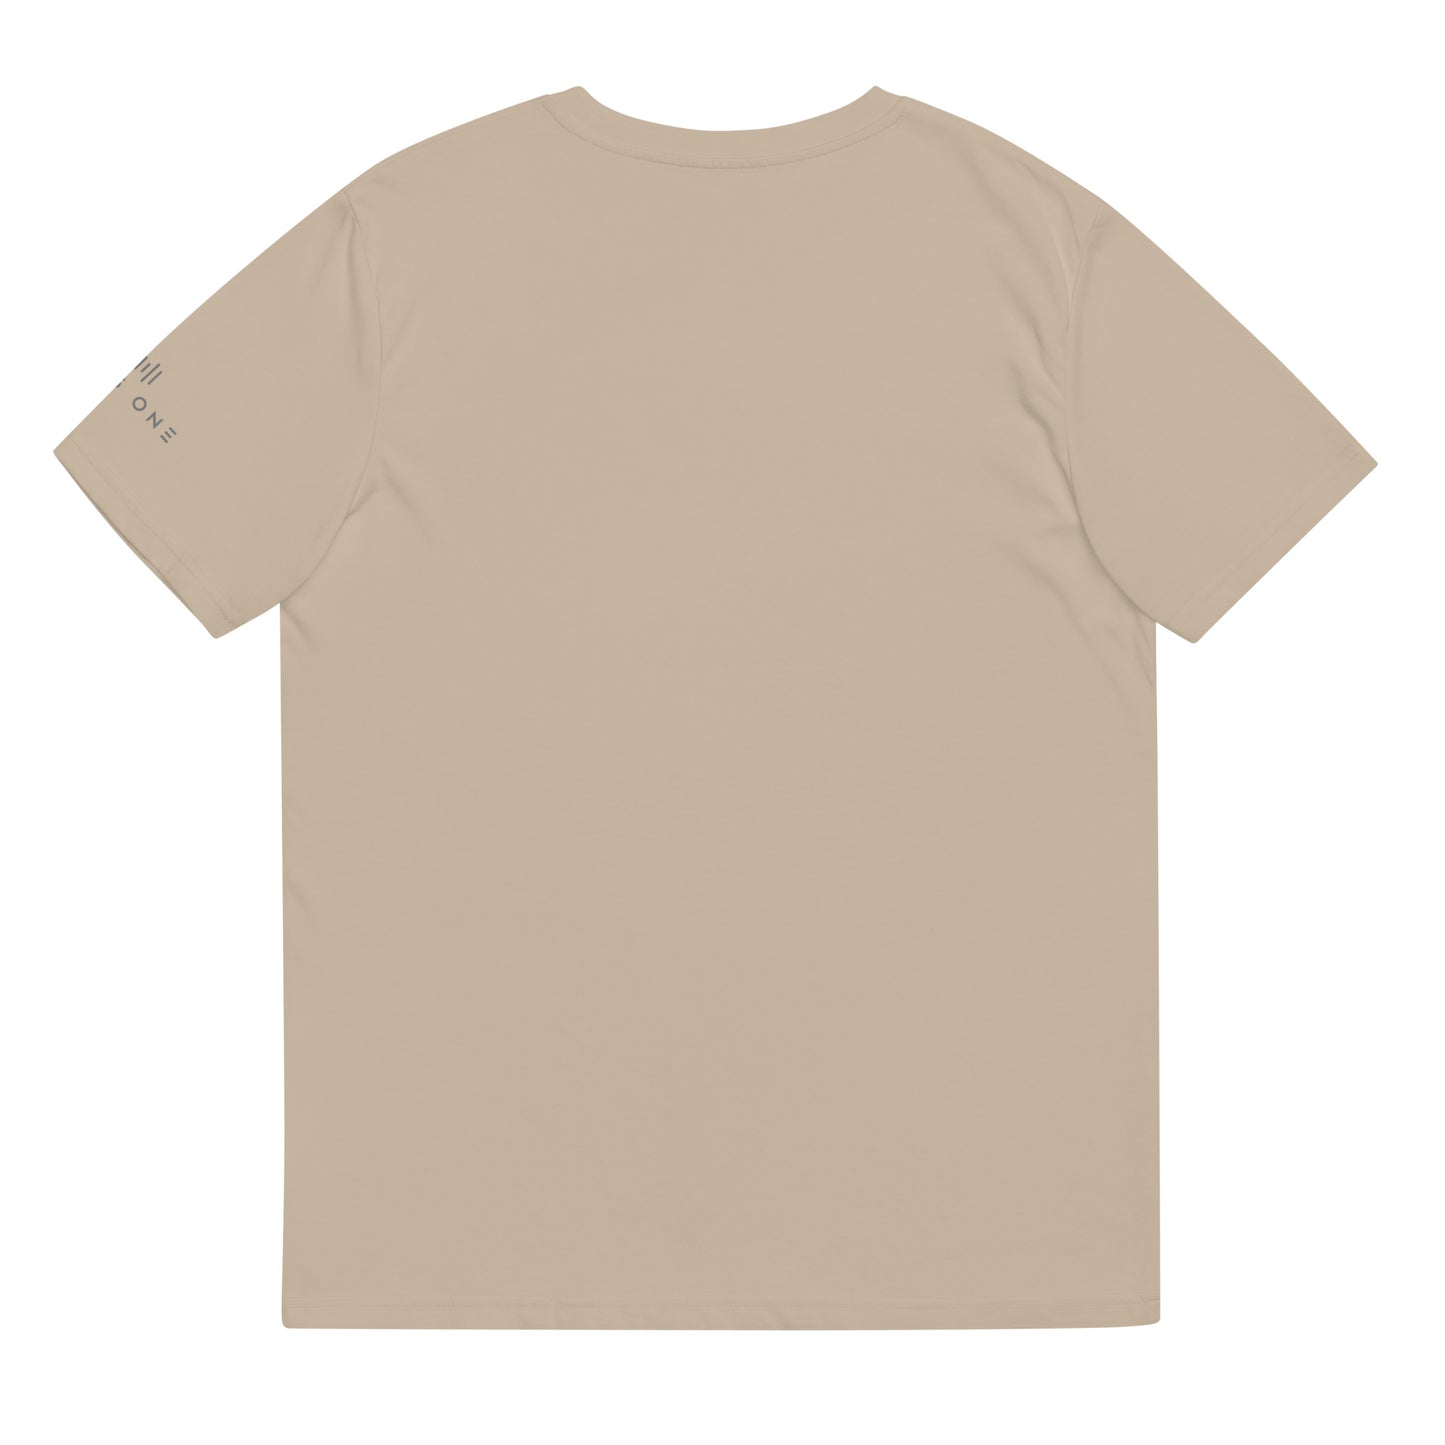 SK8 (v2) Unisex organic cotton t-shirt